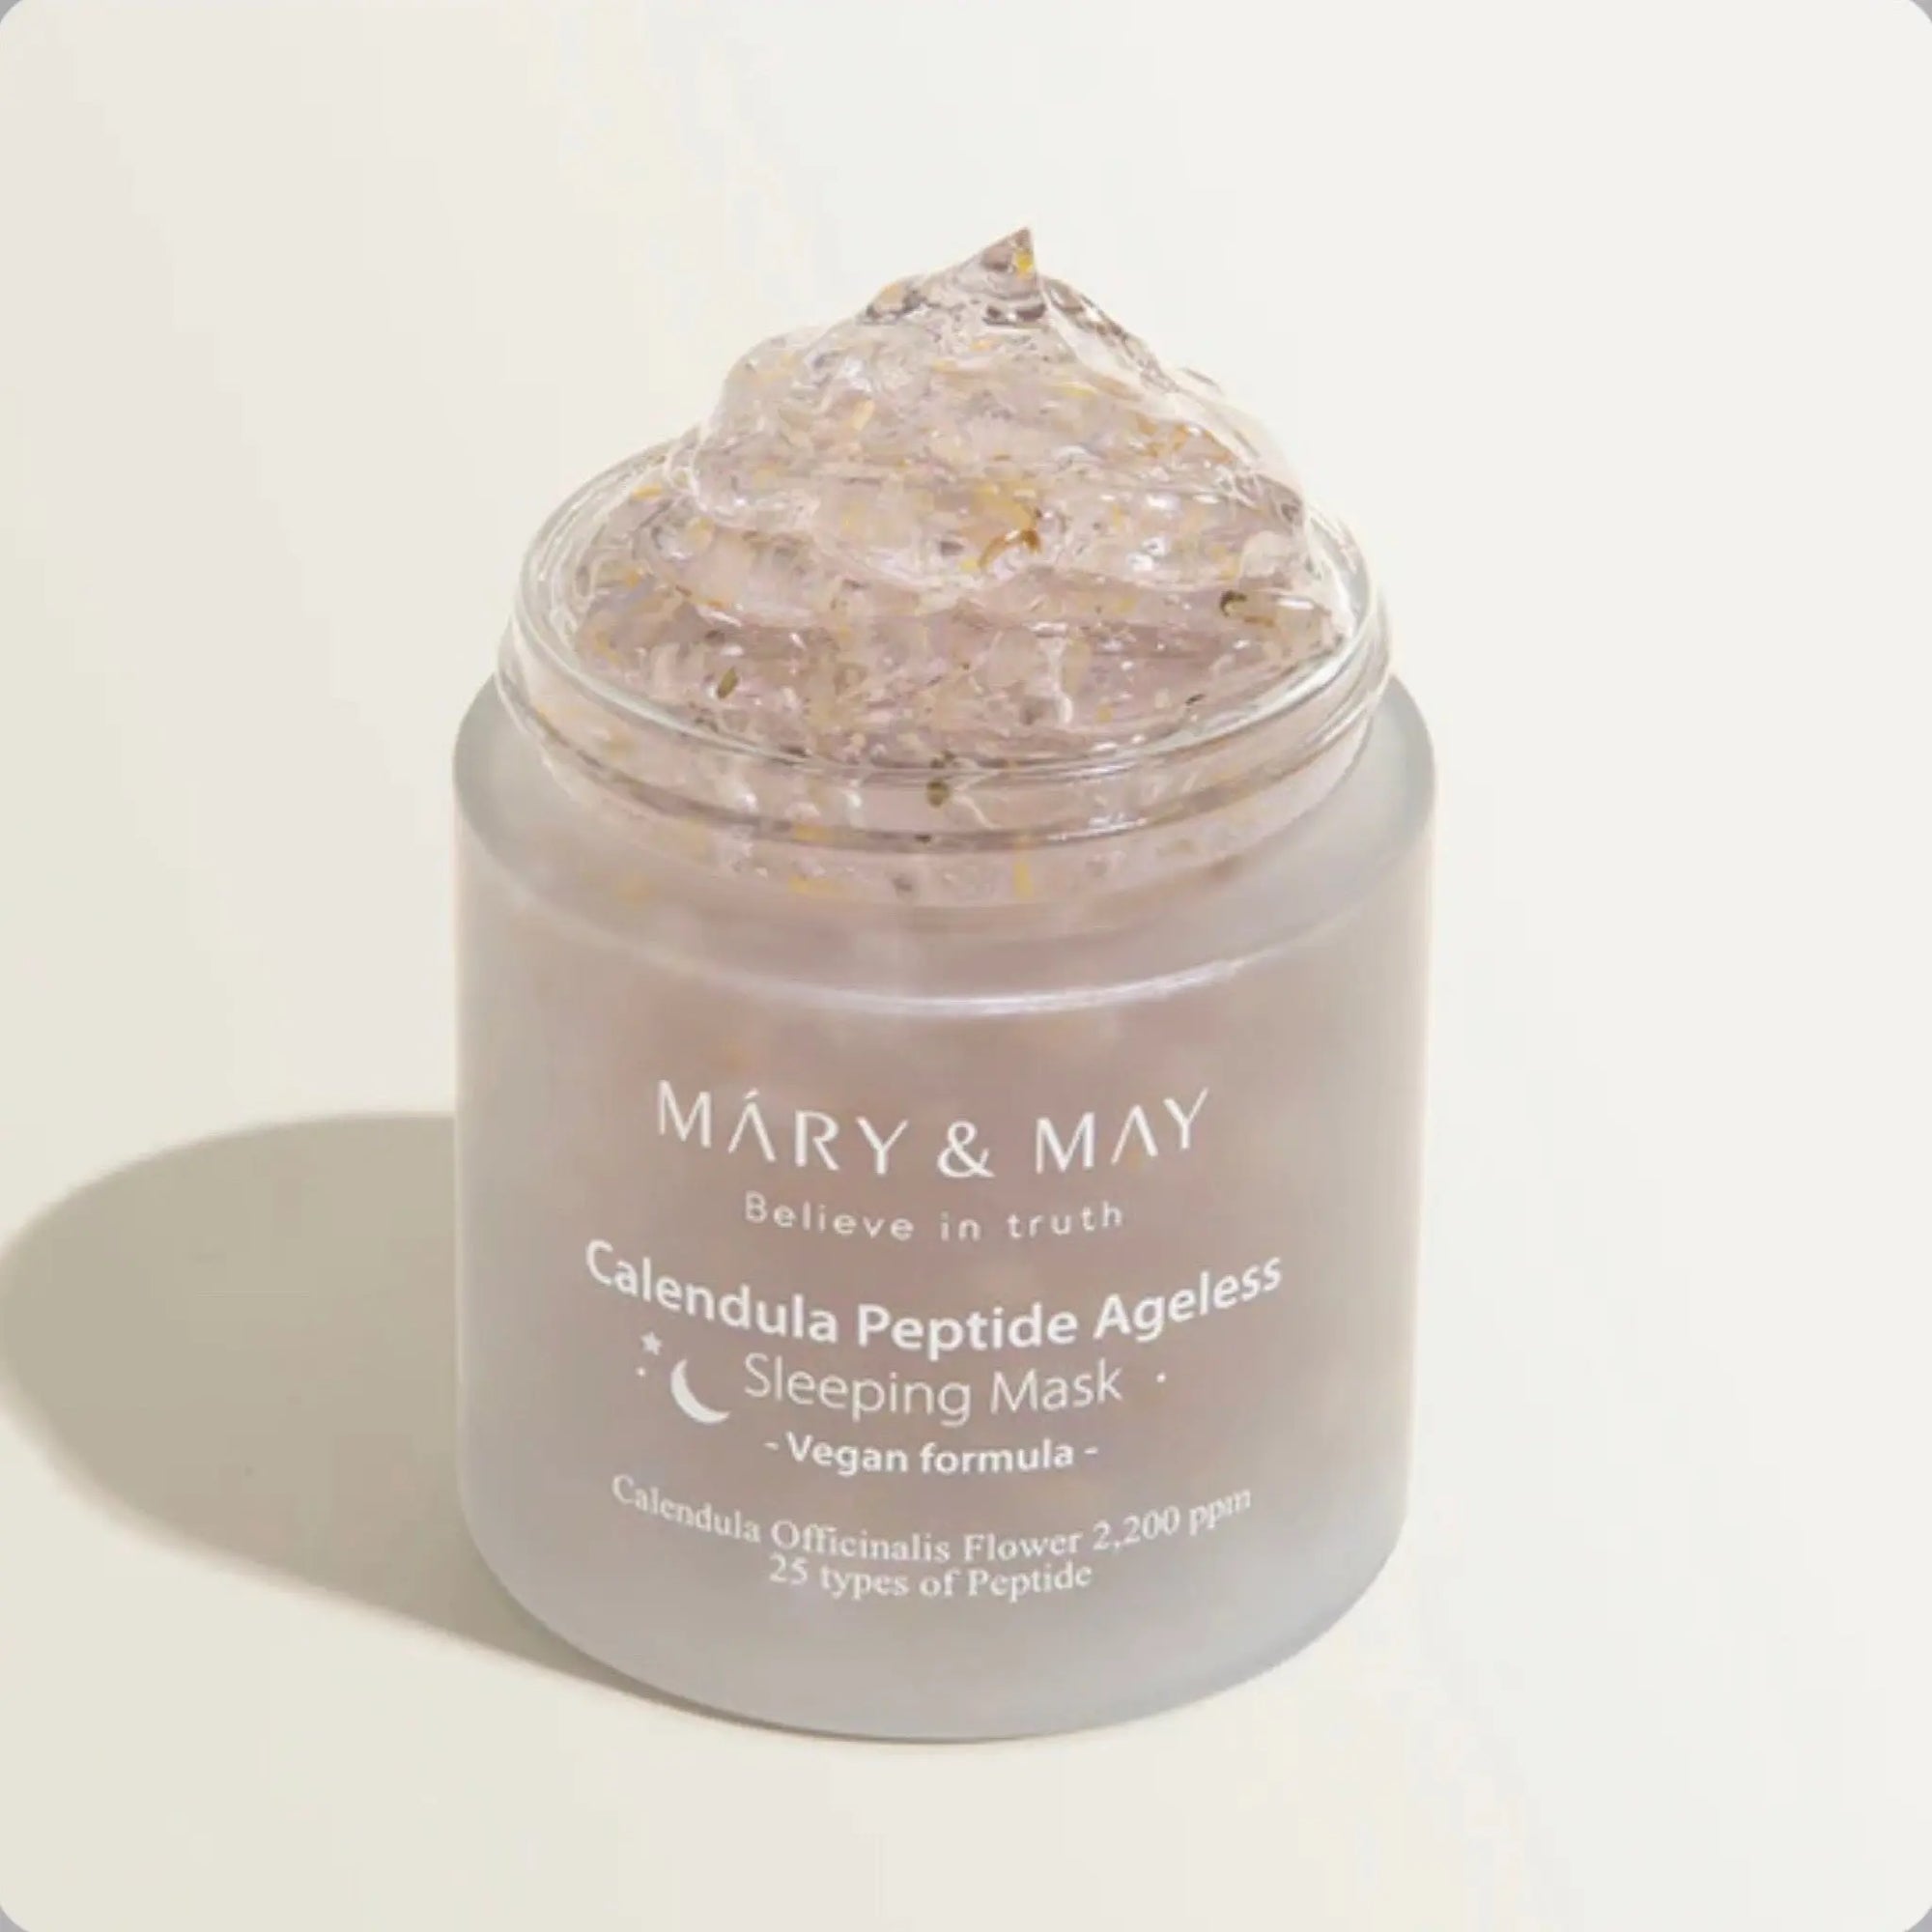 Mary & May - Calendula Peptide Ageless Sleeping Mask 110g - WanderShop